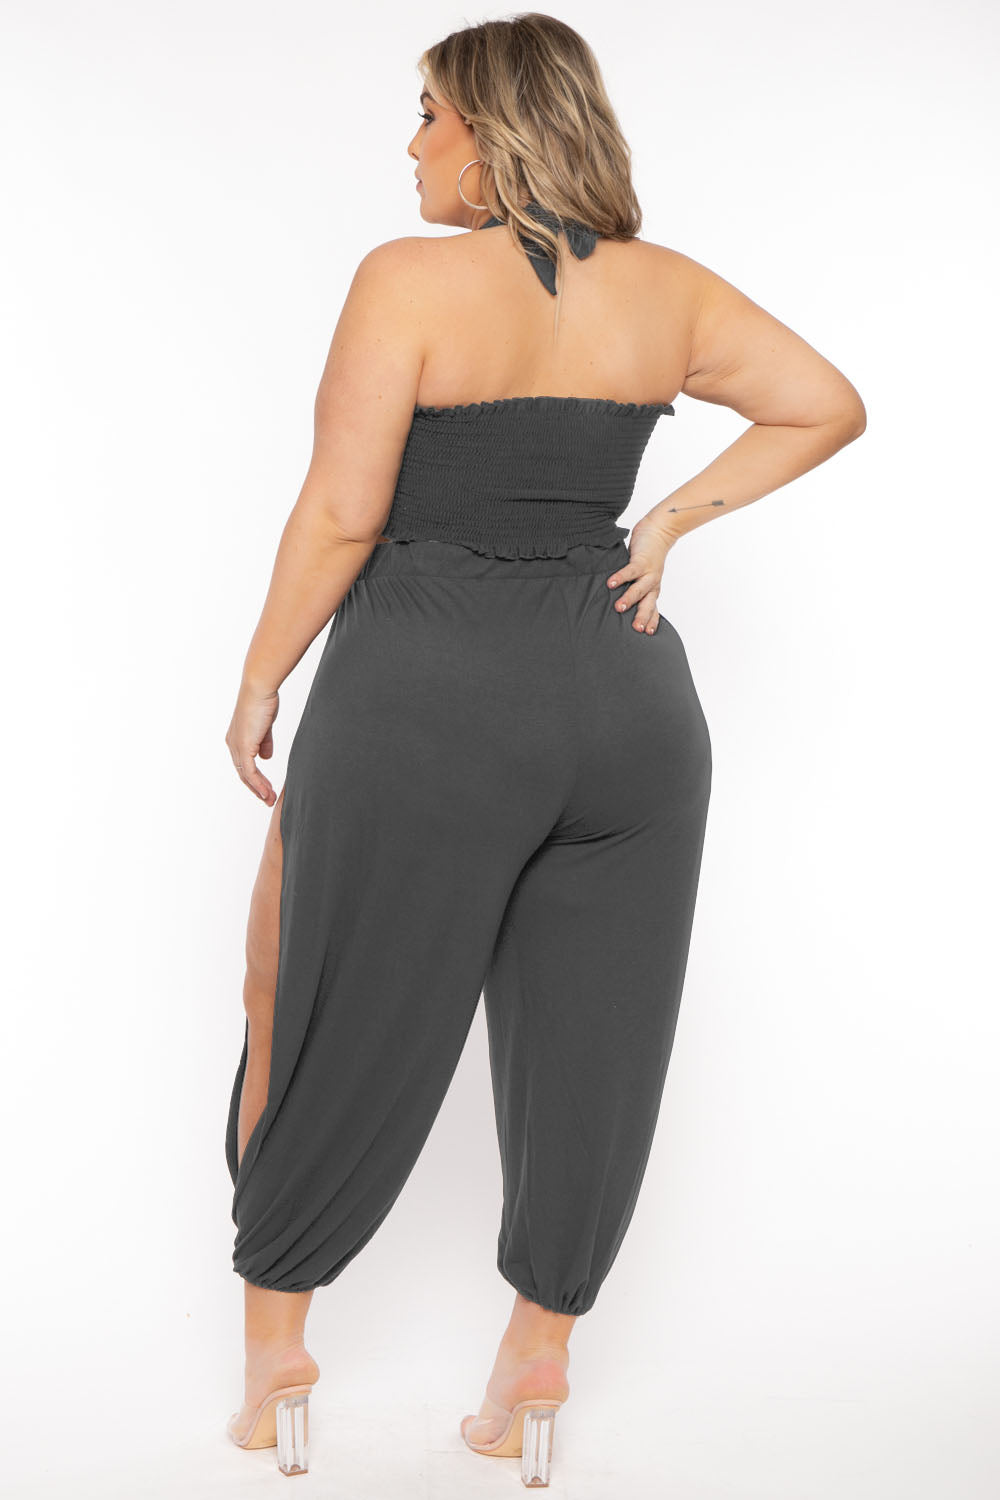 Zenana Matching Sets Plus Size Tie Front Top And Split Pant Set- Charcoal